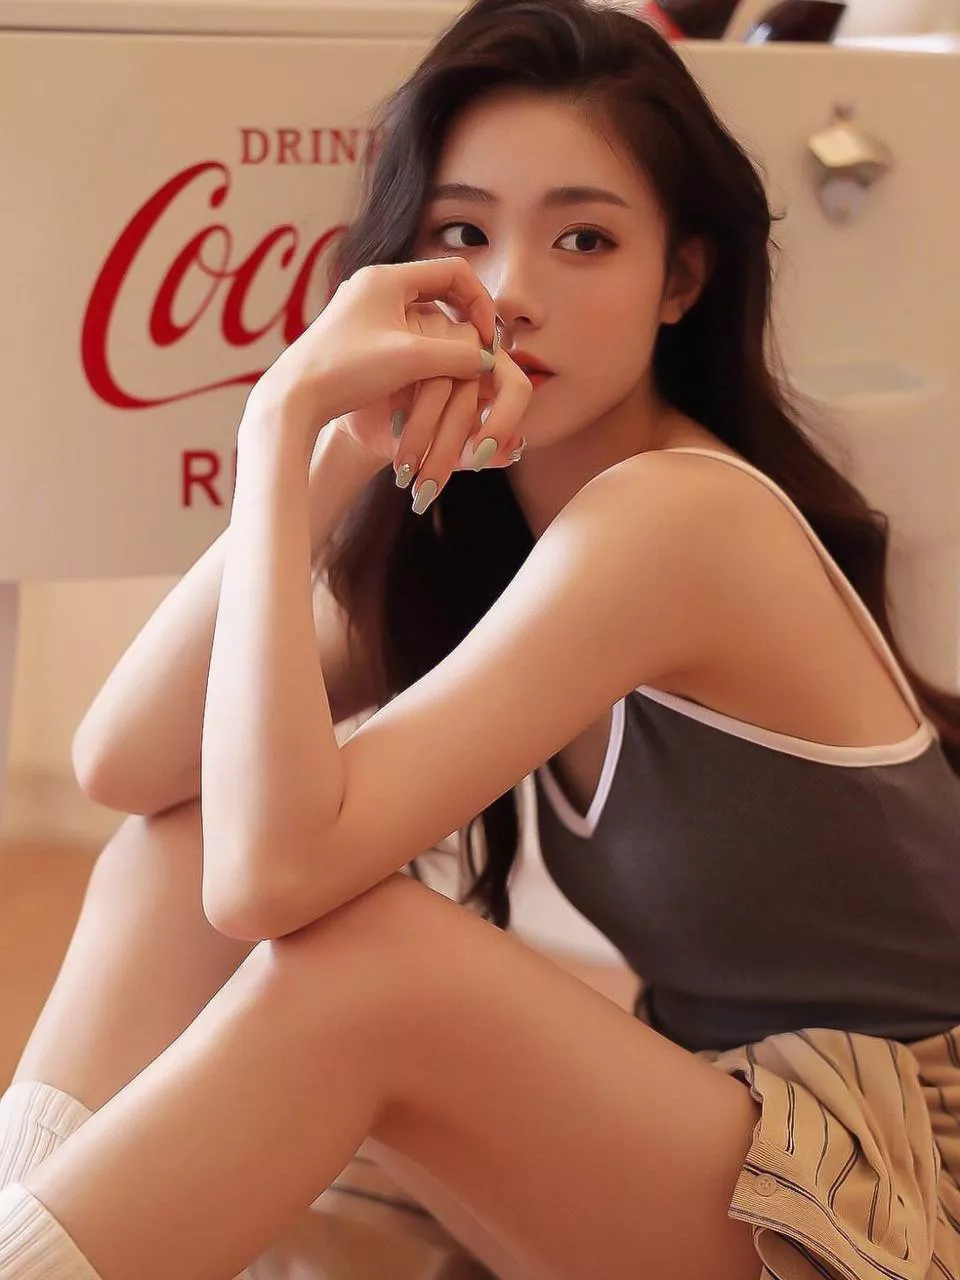 Coca-Cola beautiful woman